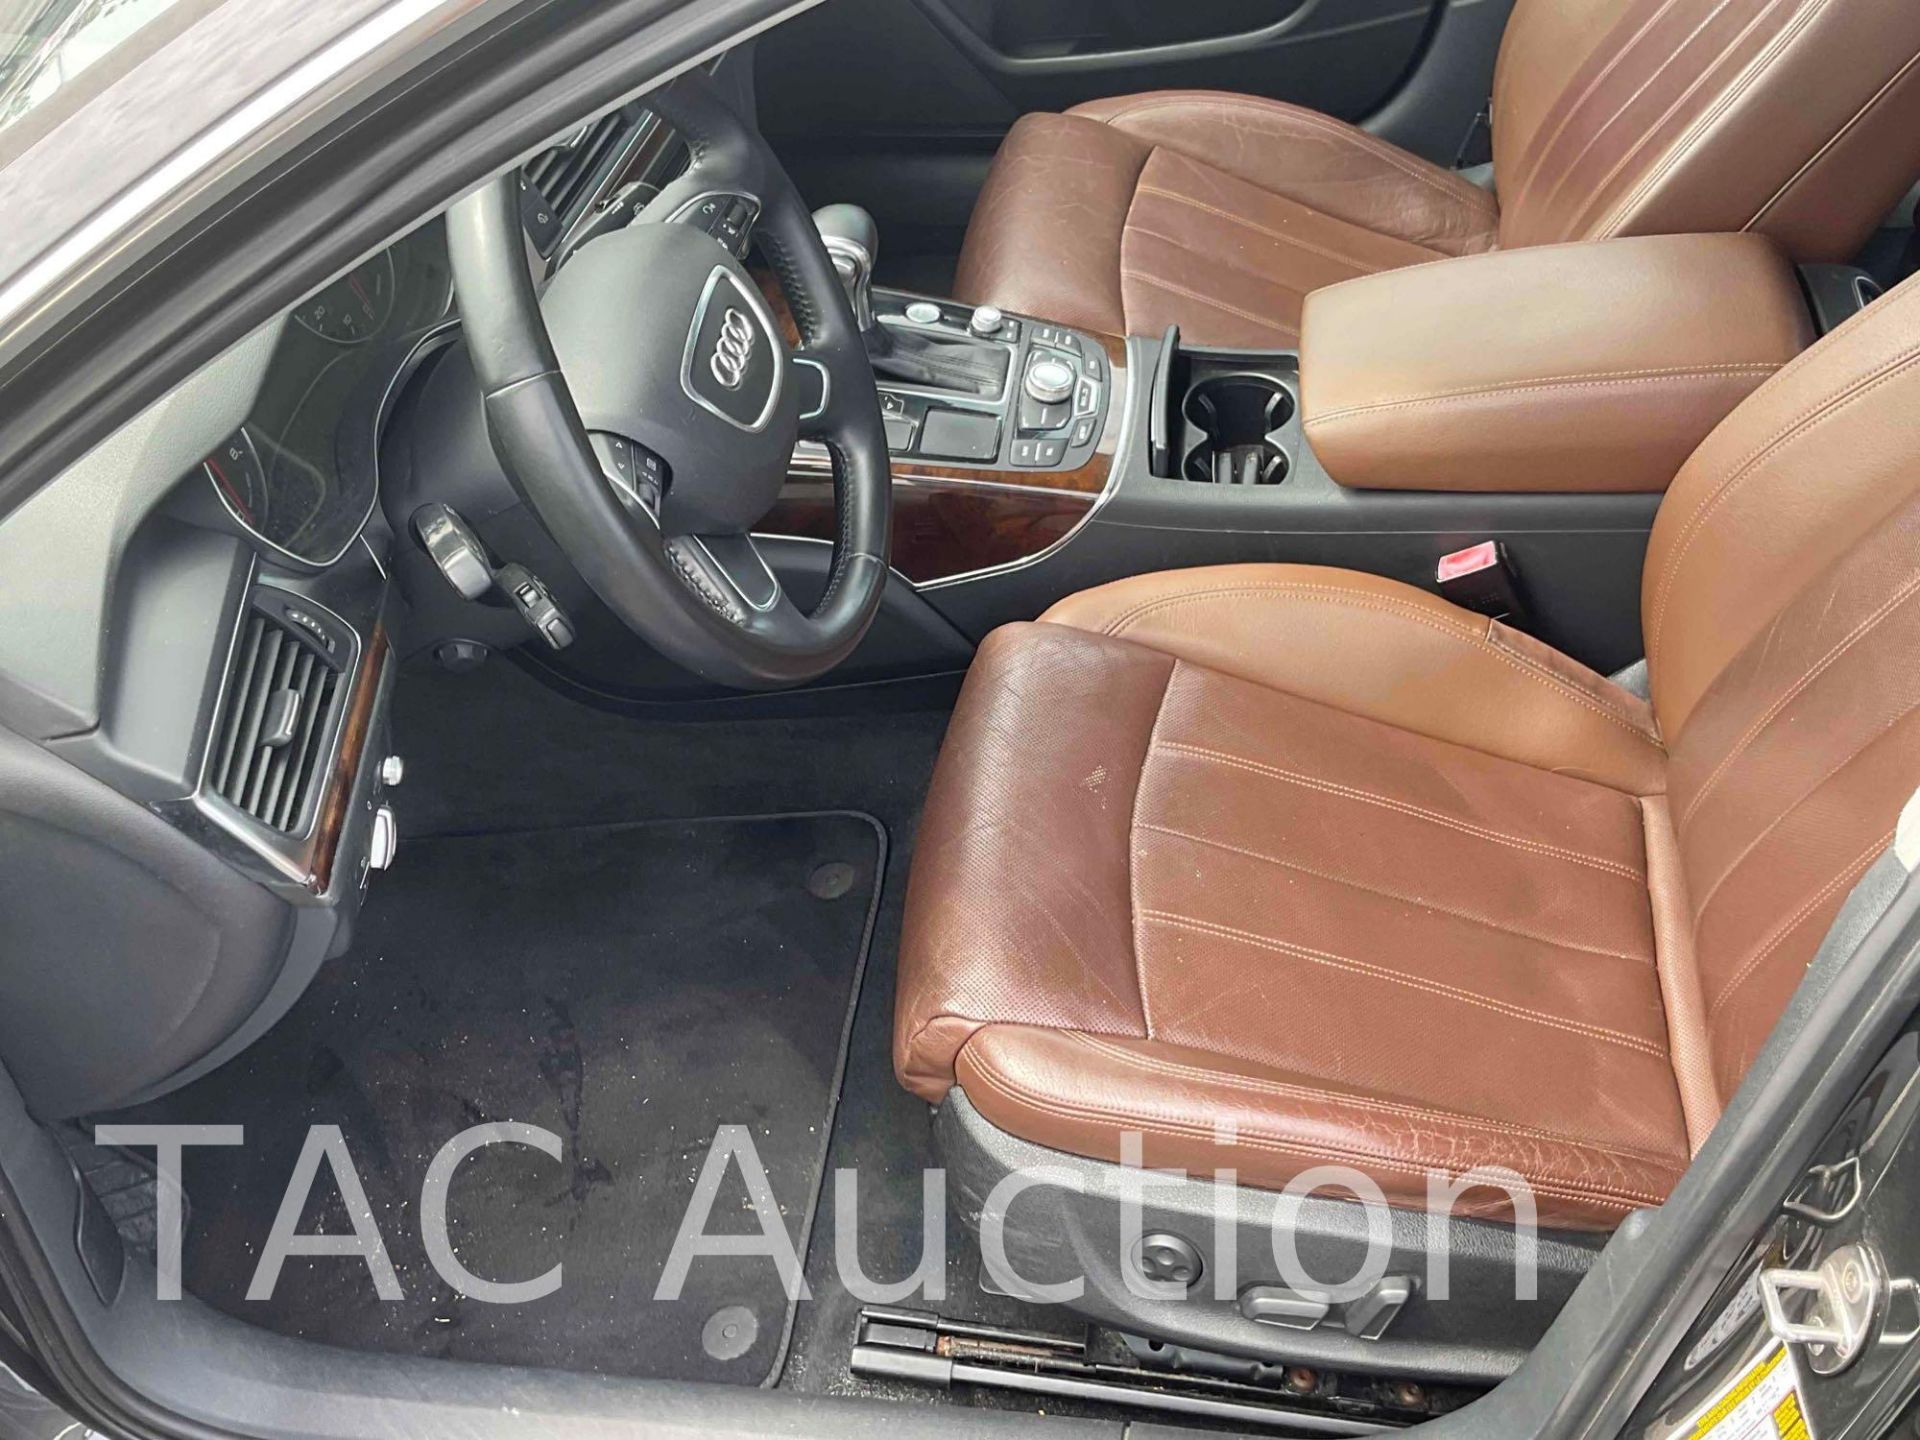 2012 Audi A6 Prestige - Image 11 of 47